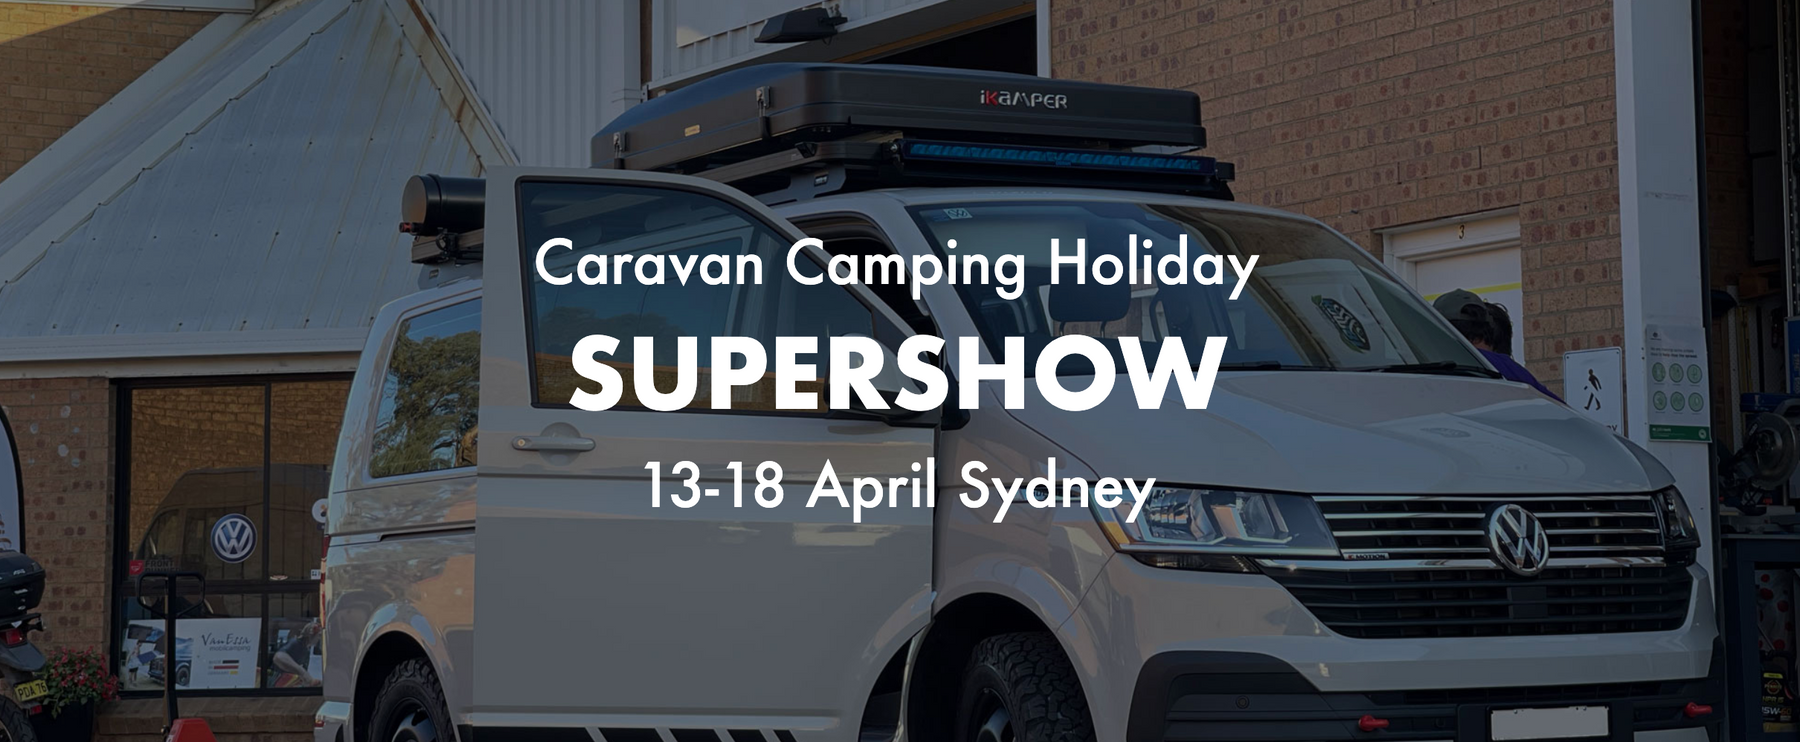 Caravan Camping Holiday  SUPERSHOW  13-18 April Sydney